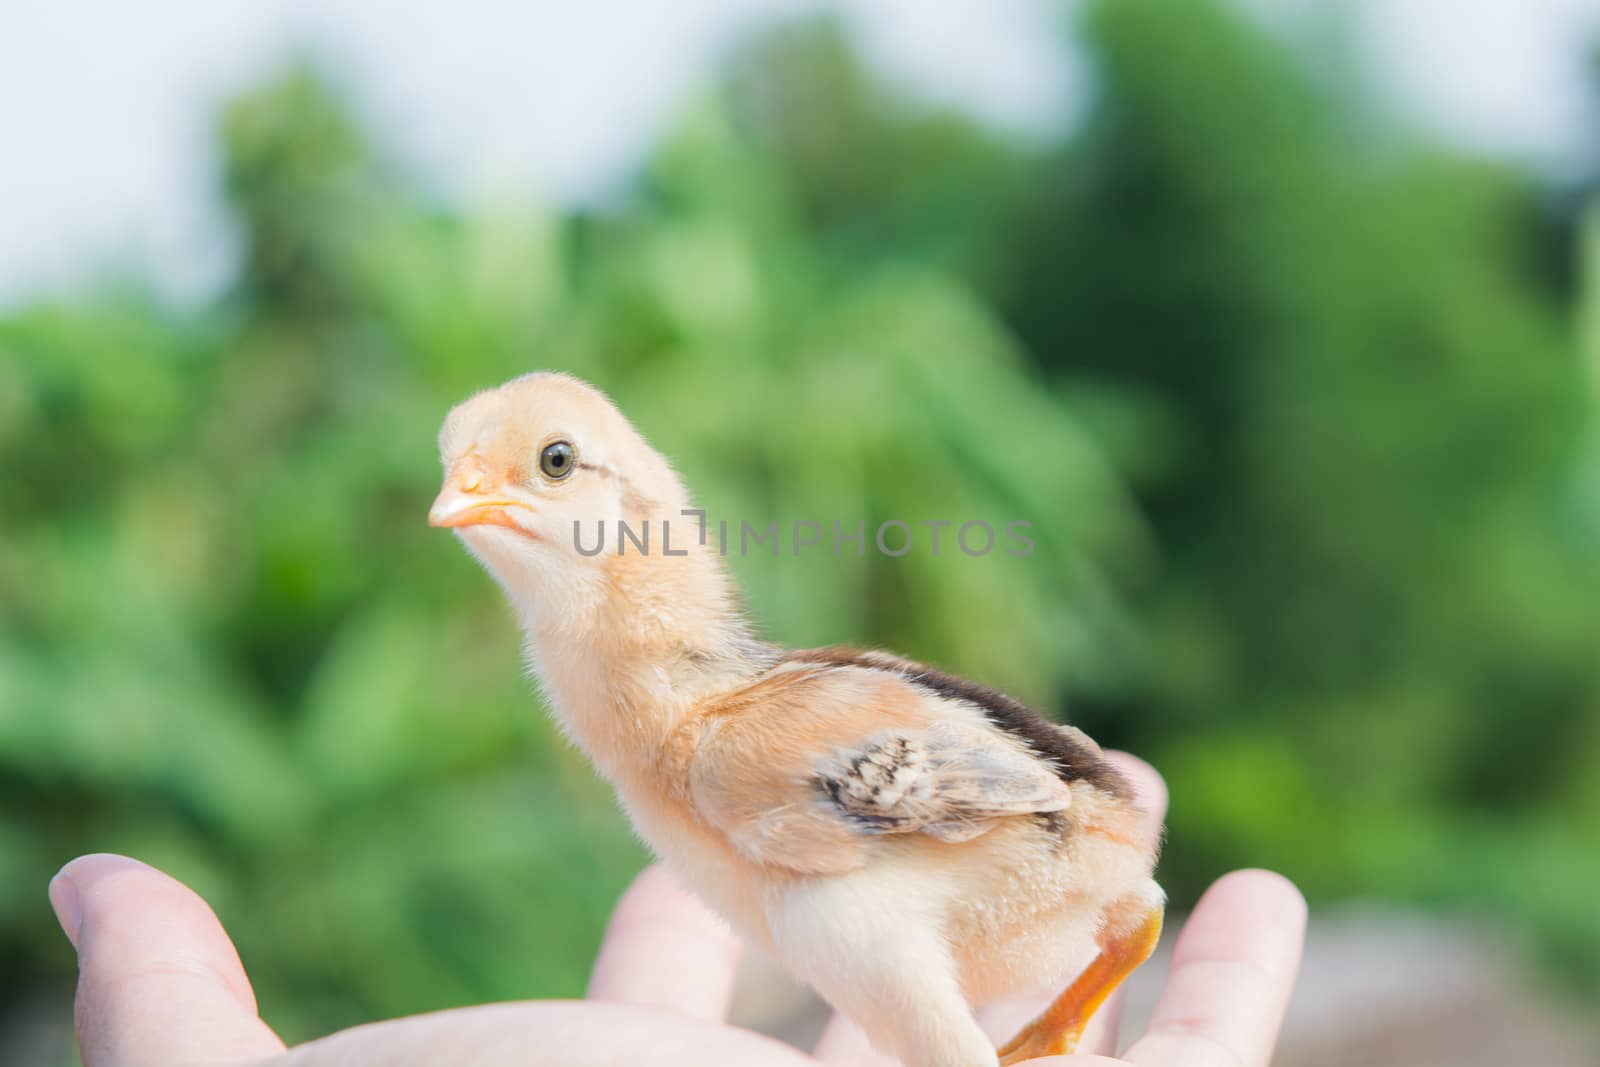 newborn chick on a hand by Sorapop